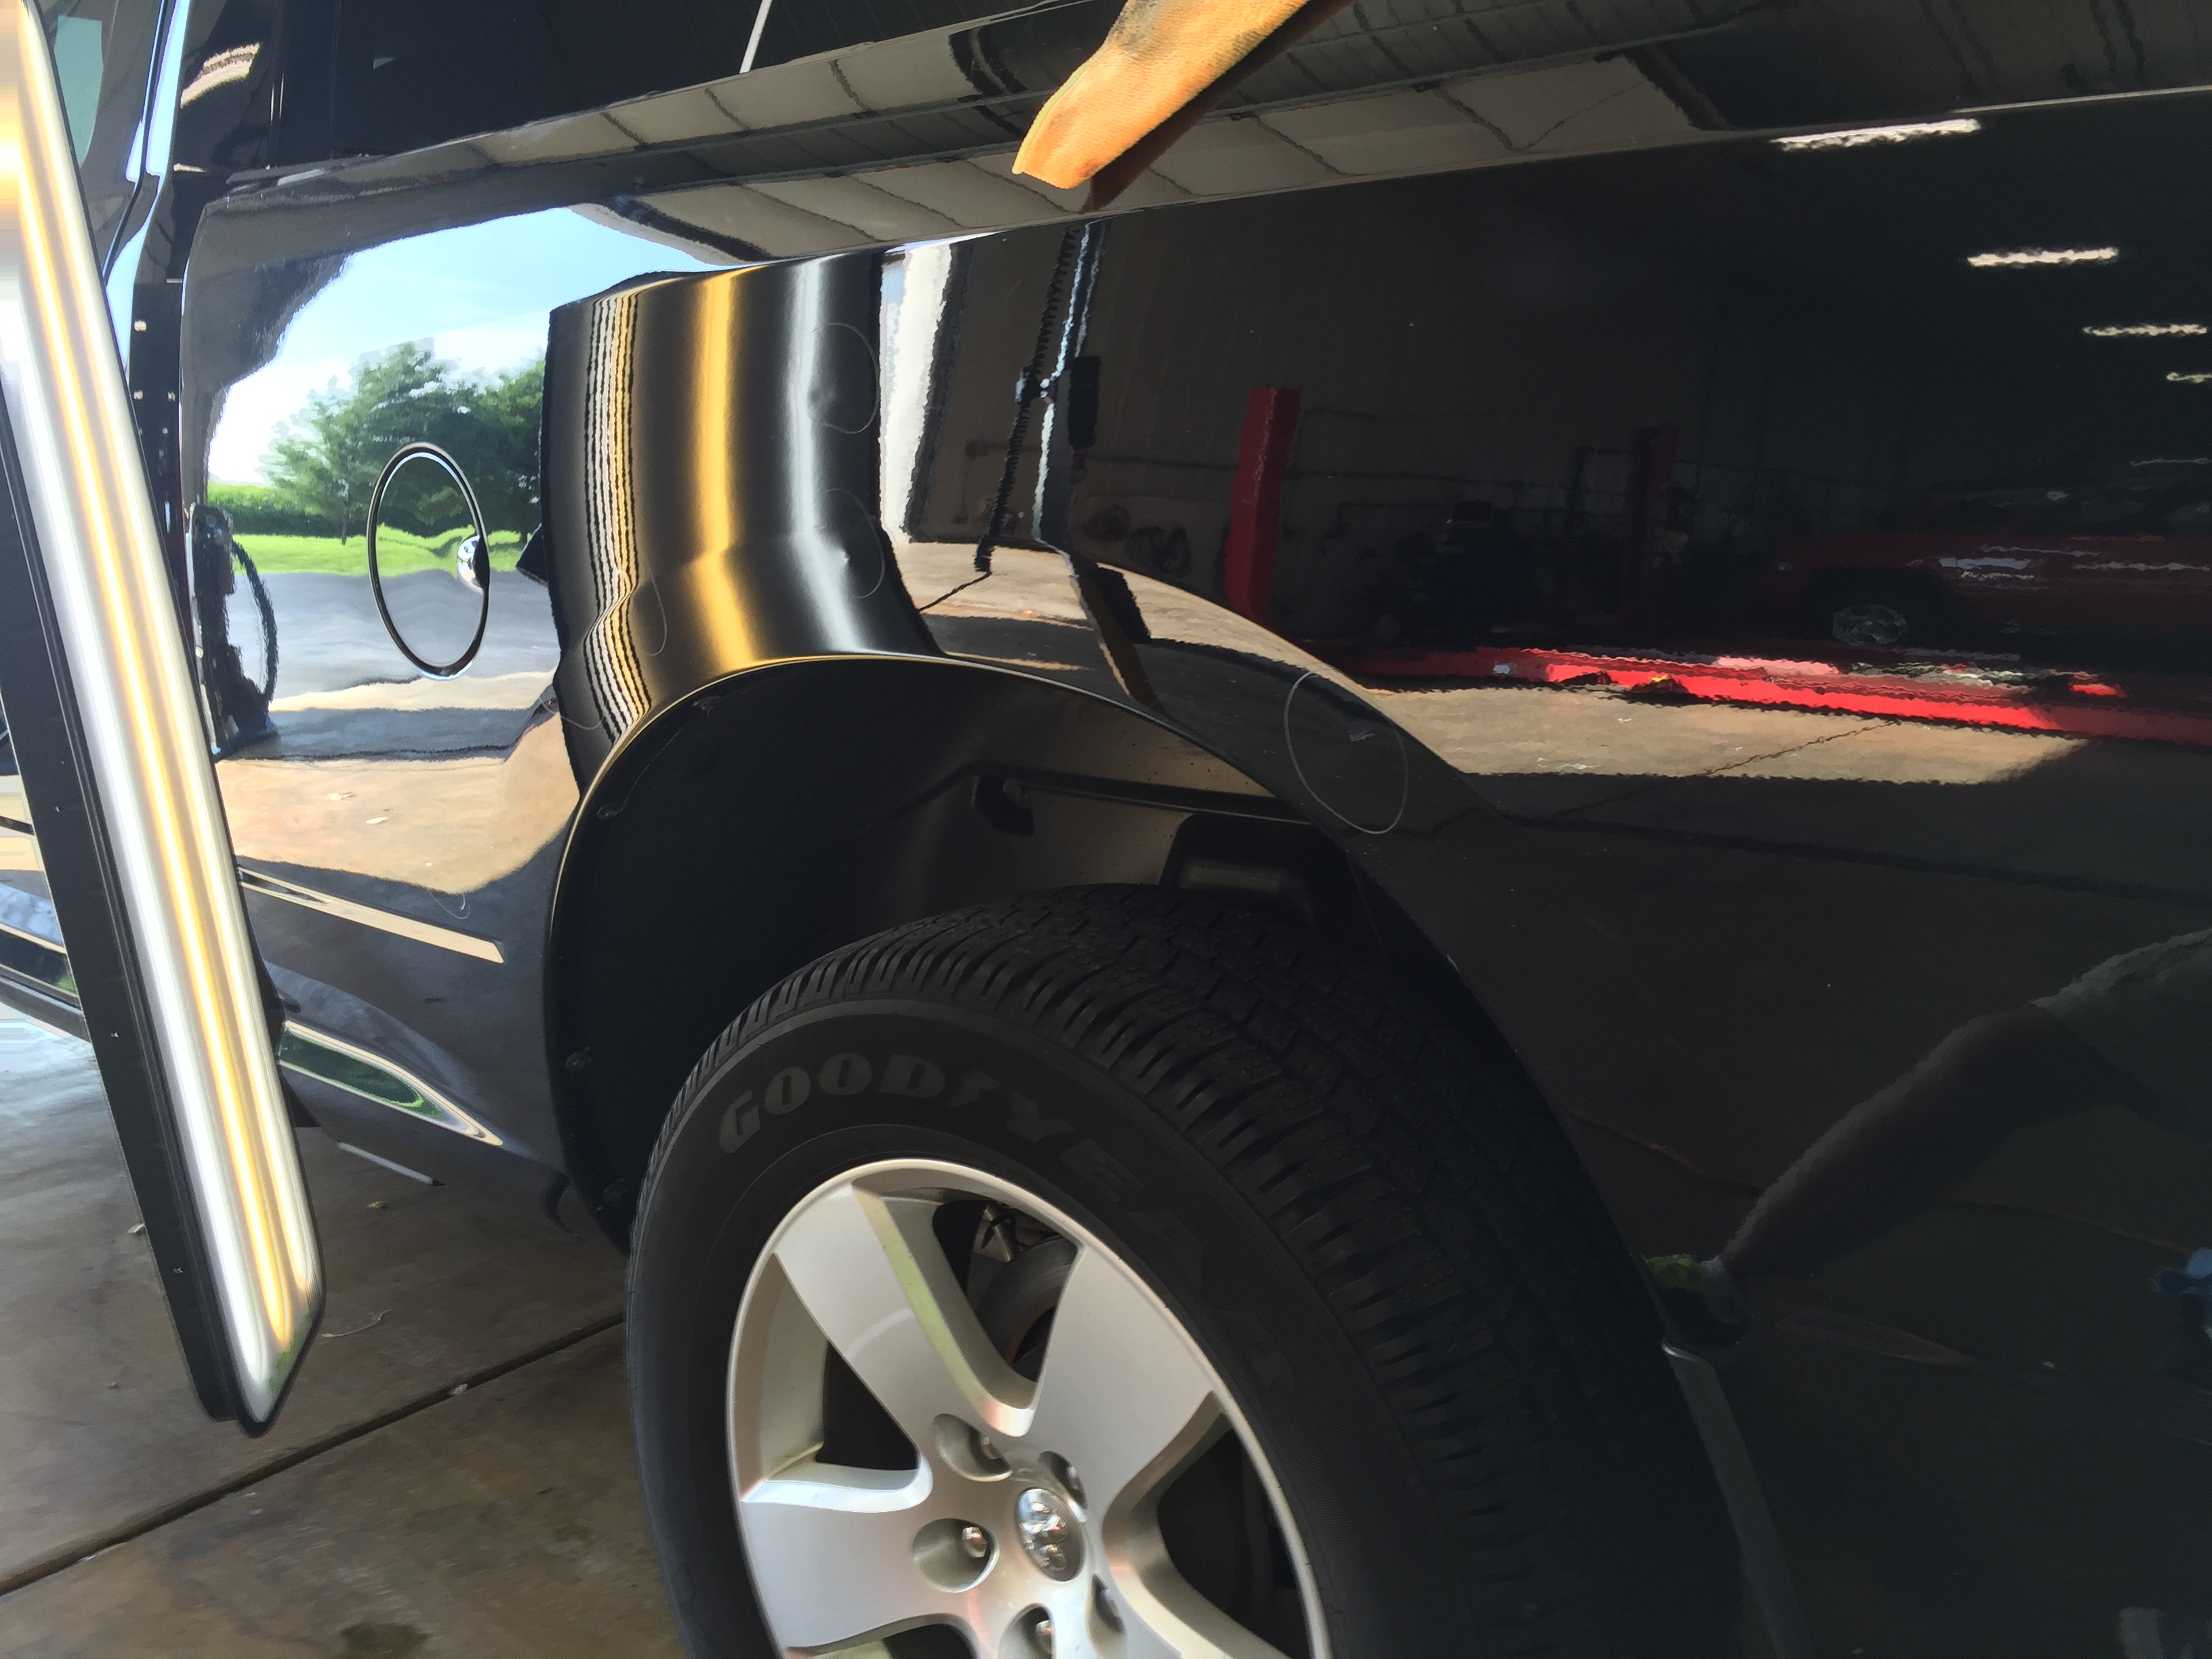 2012 Dodge Ram Bedside Damage, Paintless Dent Repair, Springfield, IL. https://217dent.com